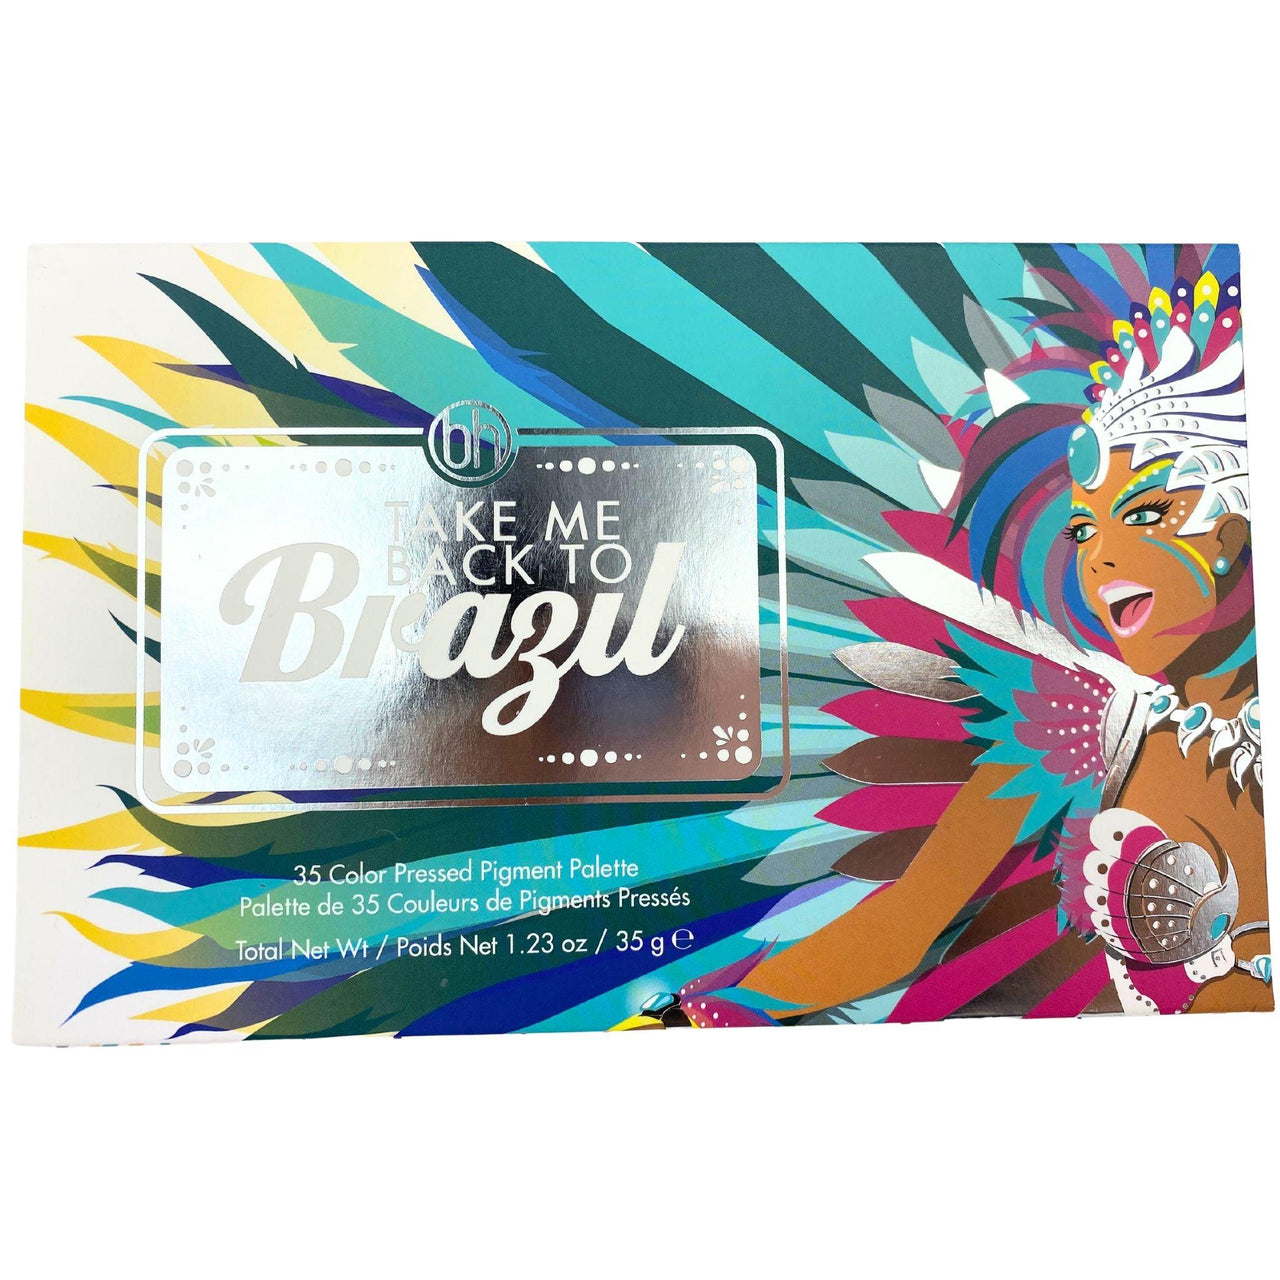 BH Cosmetics Take Me Back To Brazil 35 Color Pressed Pigment Palette (42 Pcs Lot) - Discount Wholesalers Inc